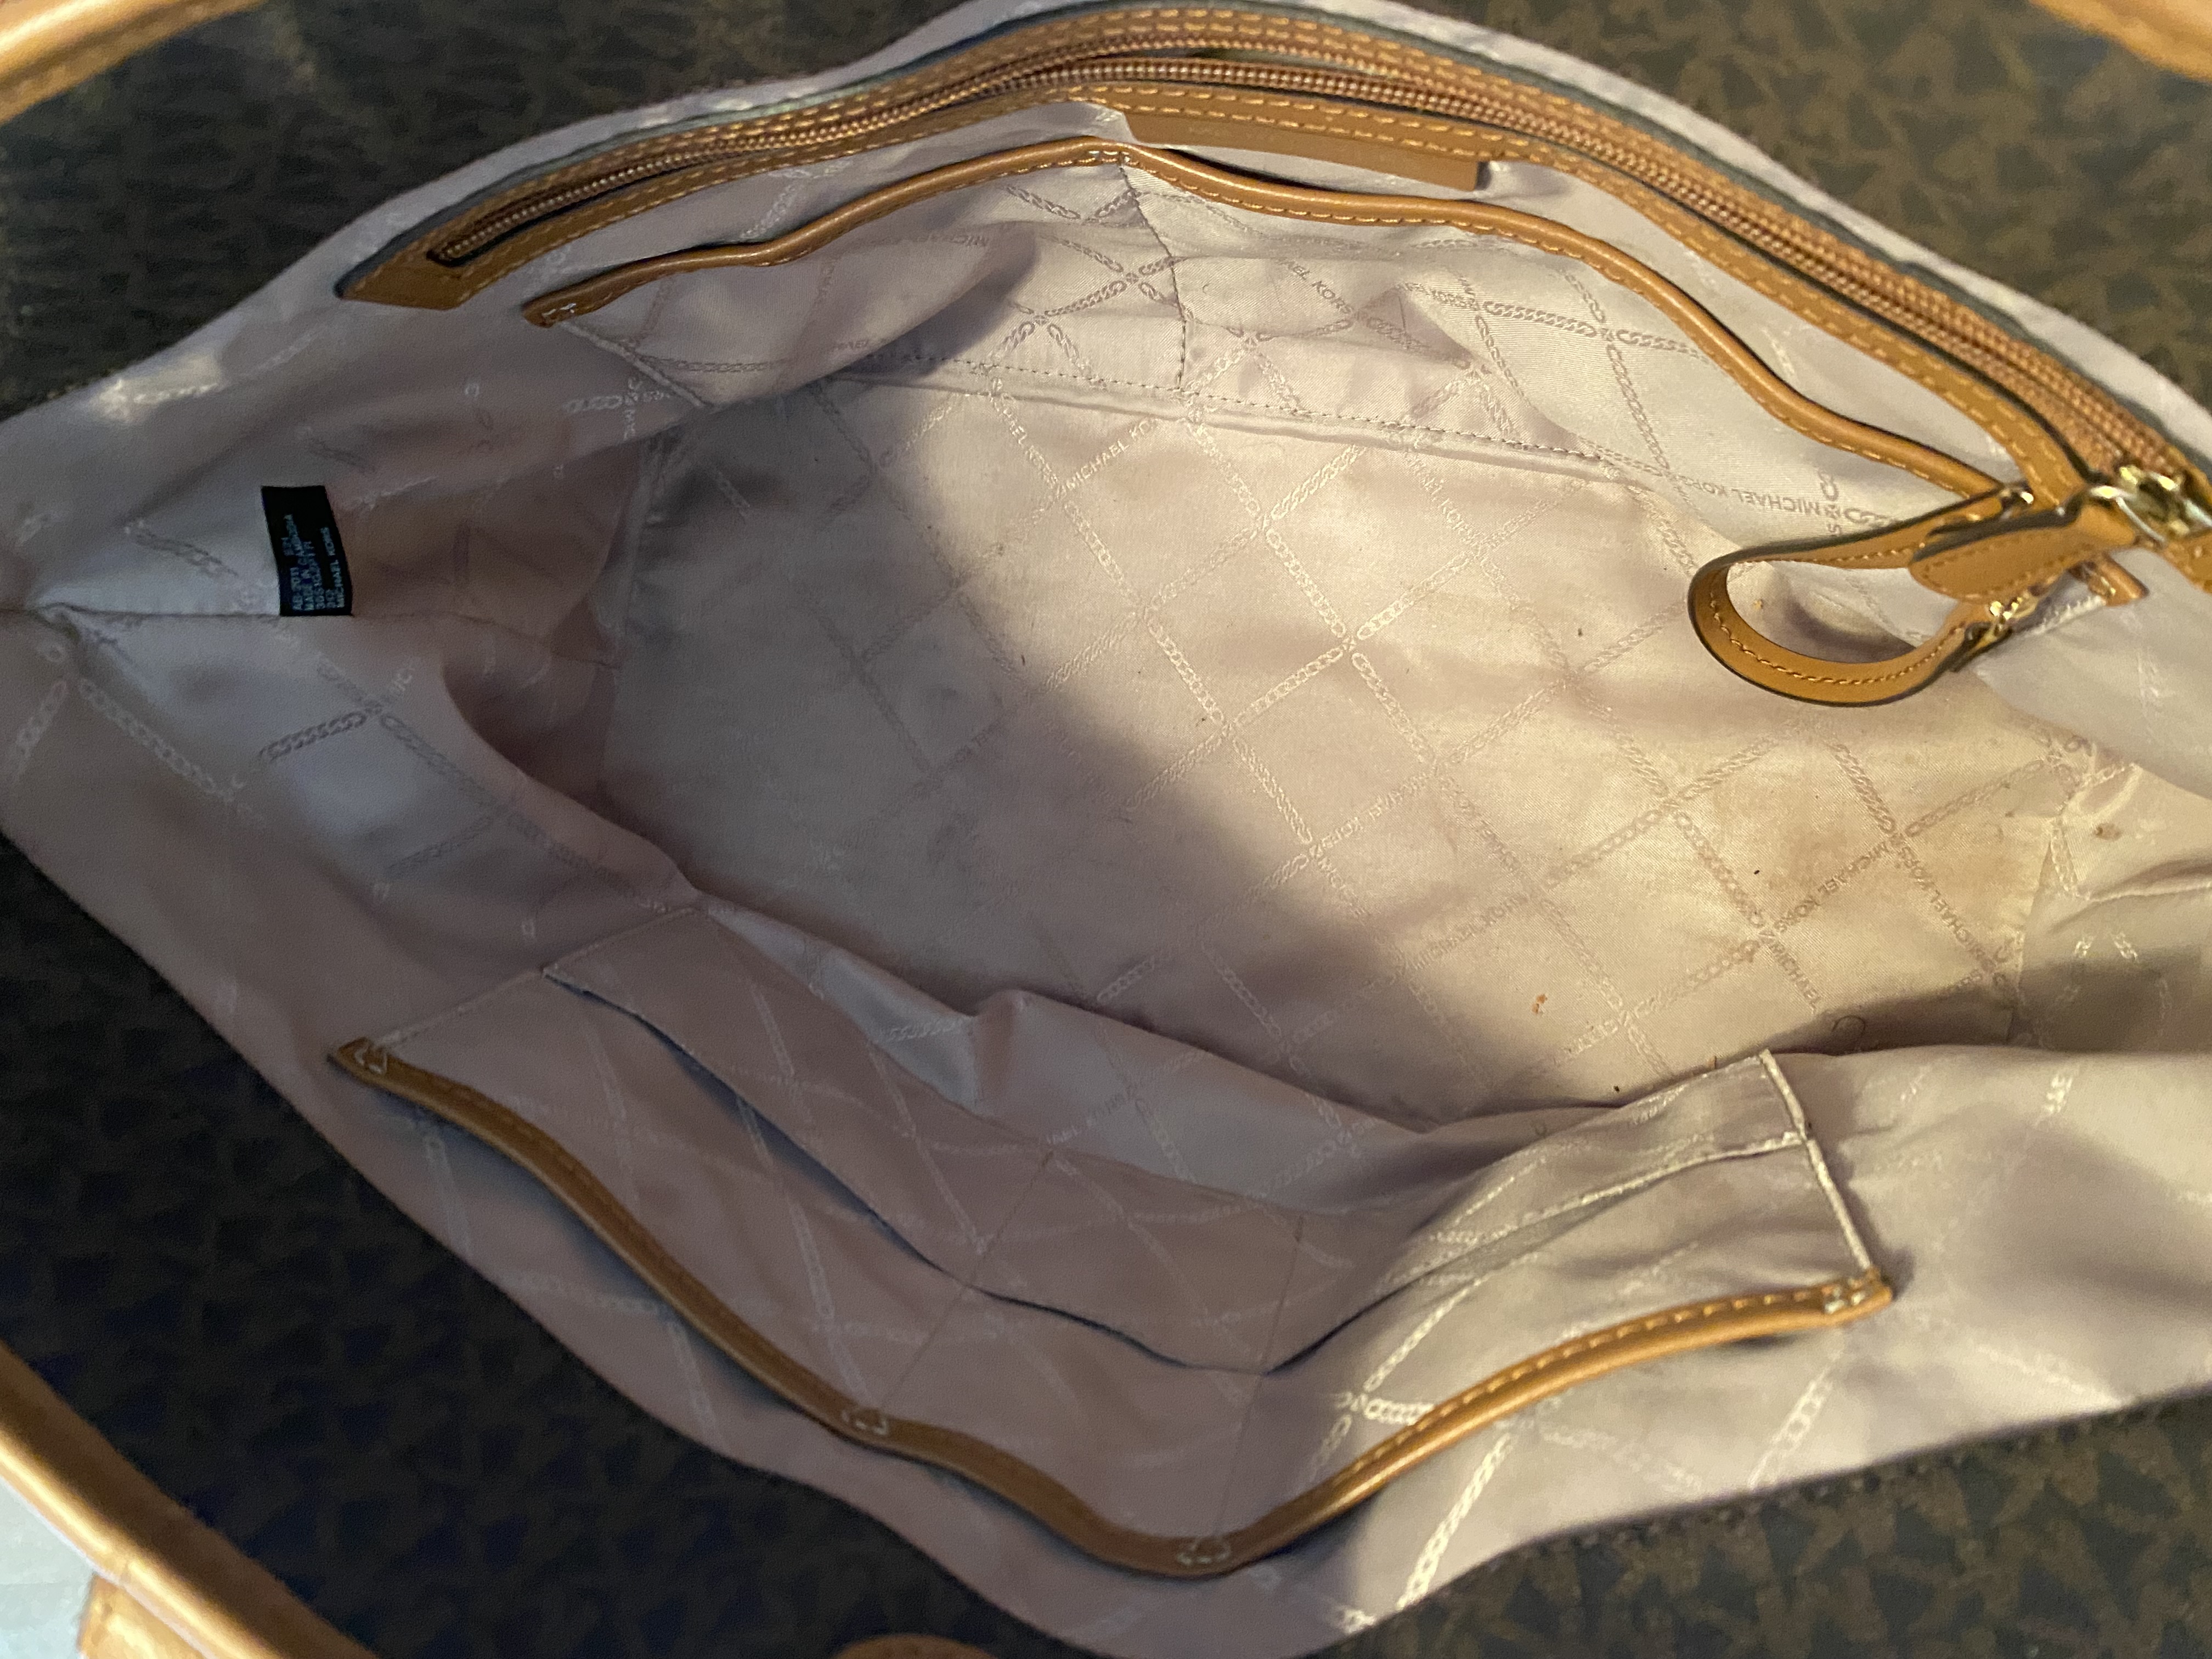 Michael Kors  Bags  Look Its Cancel  Poshmark